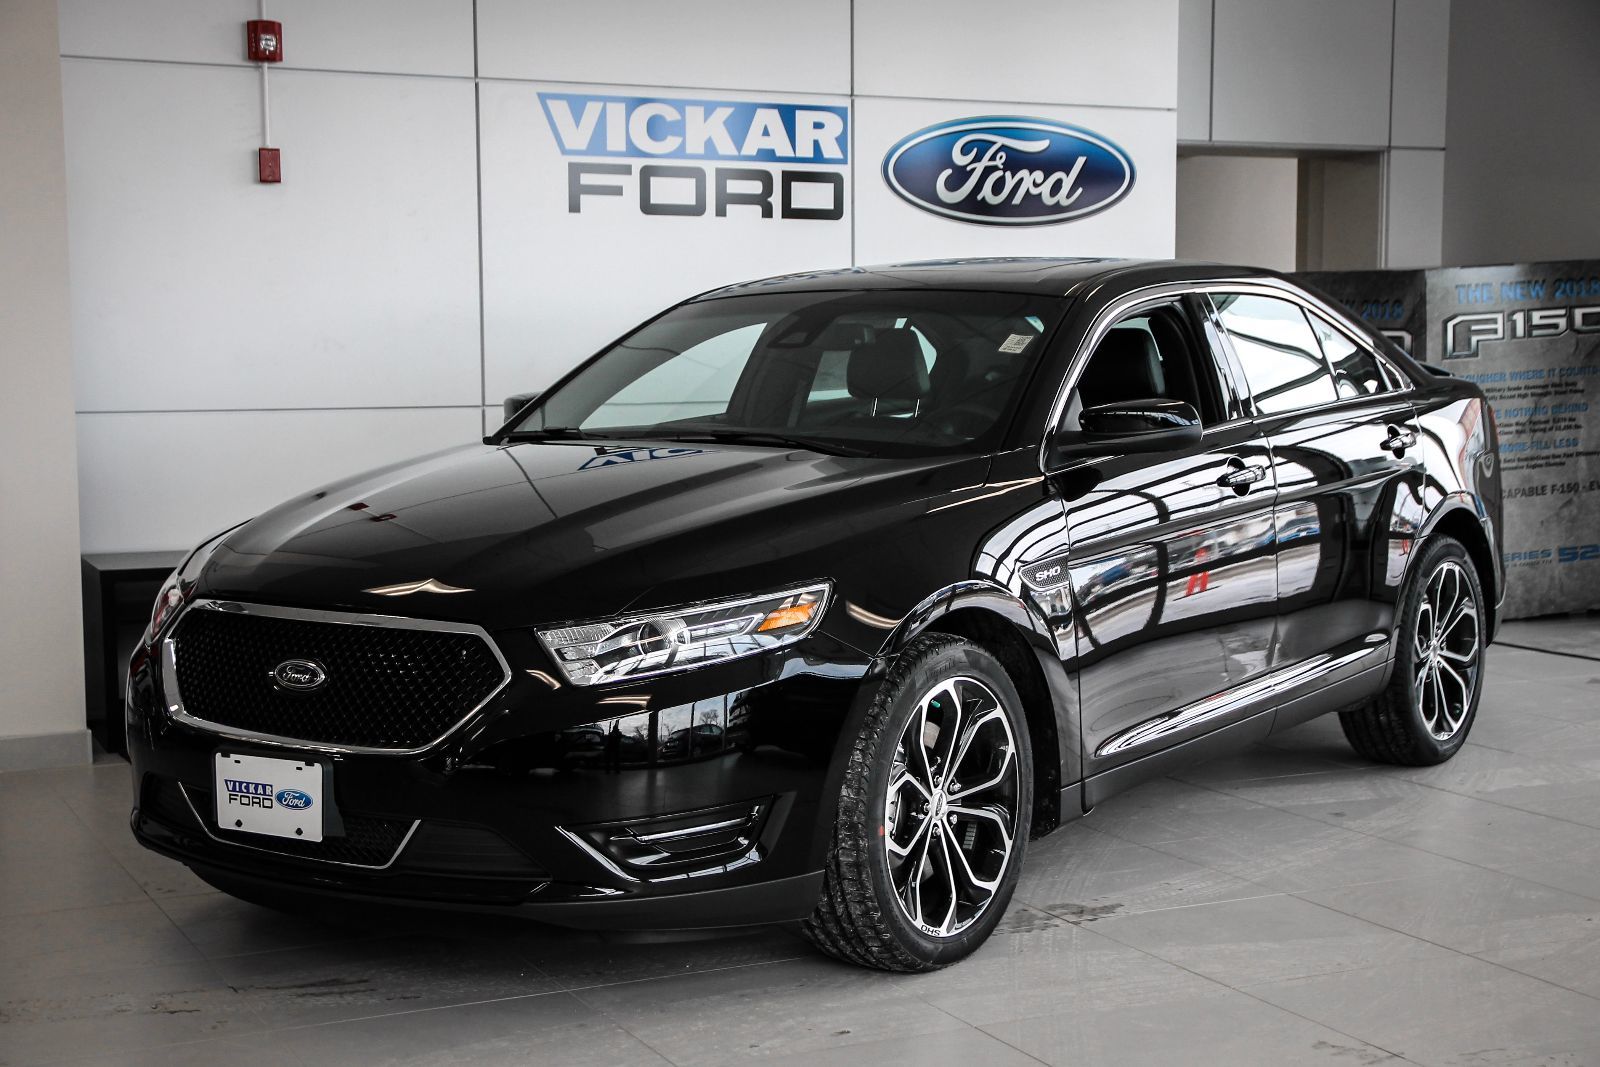 New 2018 Ford Taurus SHO Shadow Black for sale $54245.75 18C4936 Vickar
Ford Winnipeg